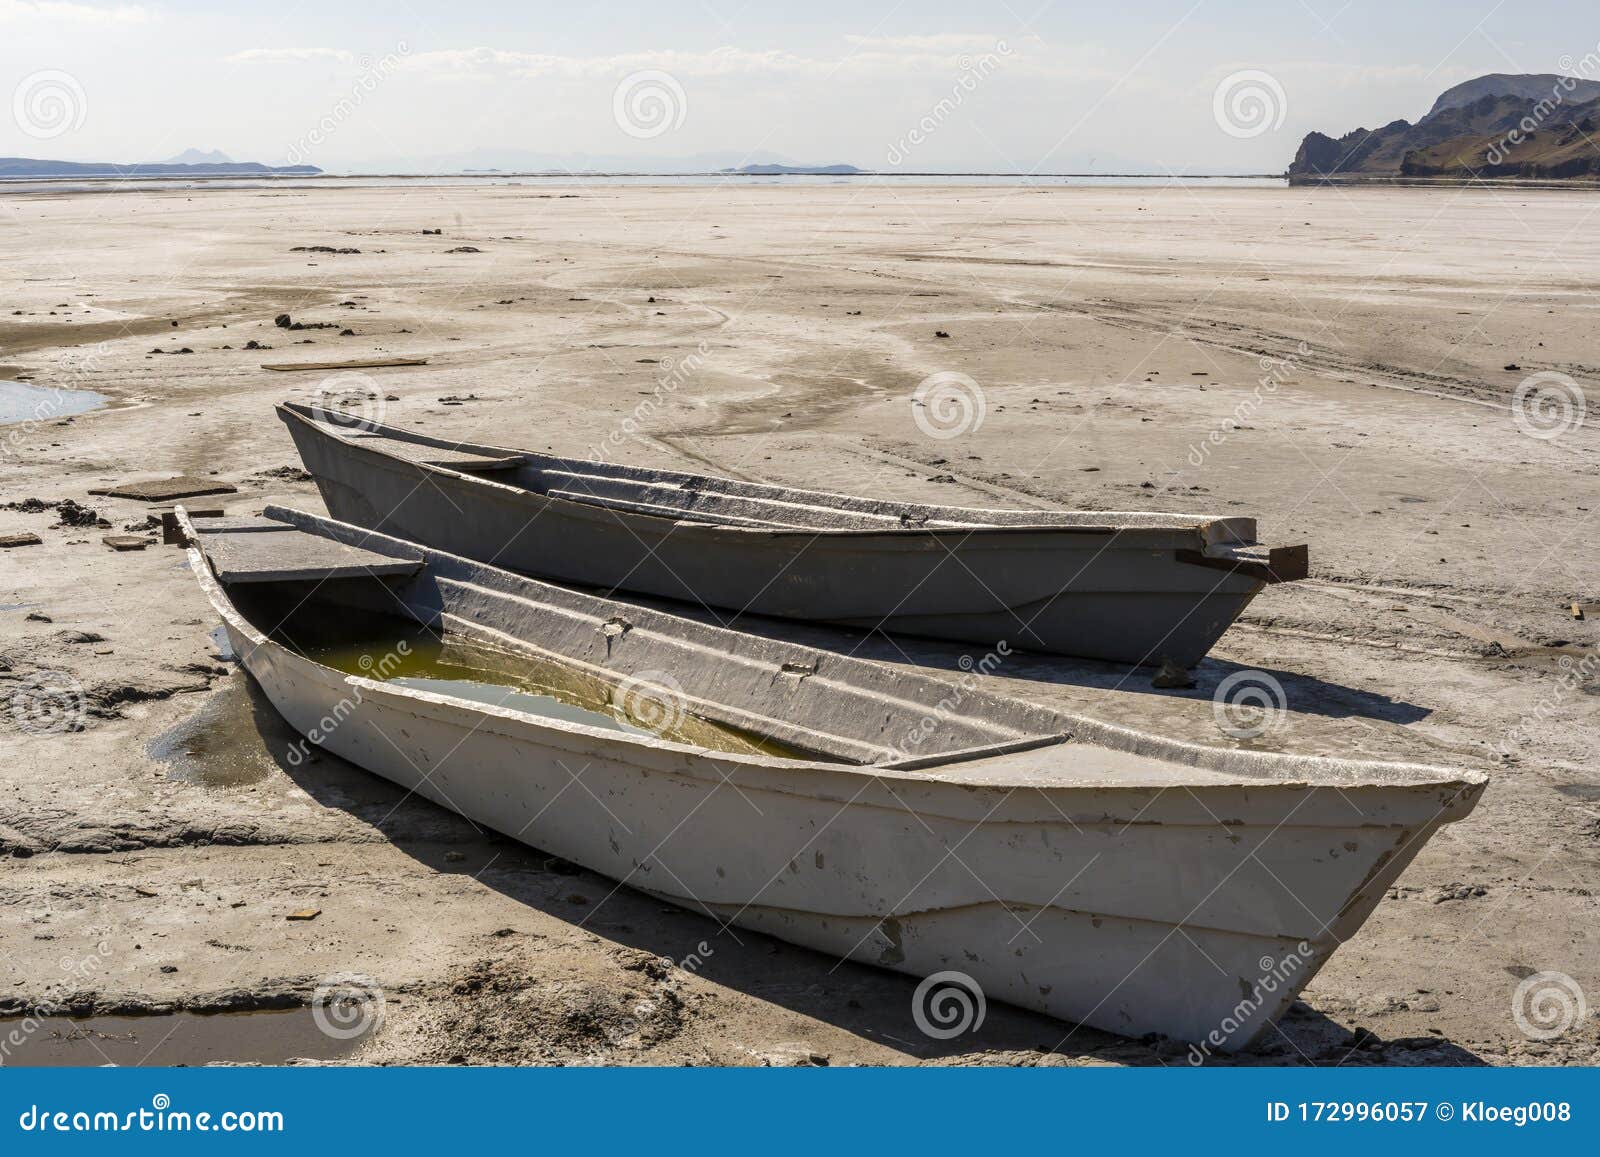 urmia salt lake boats iran